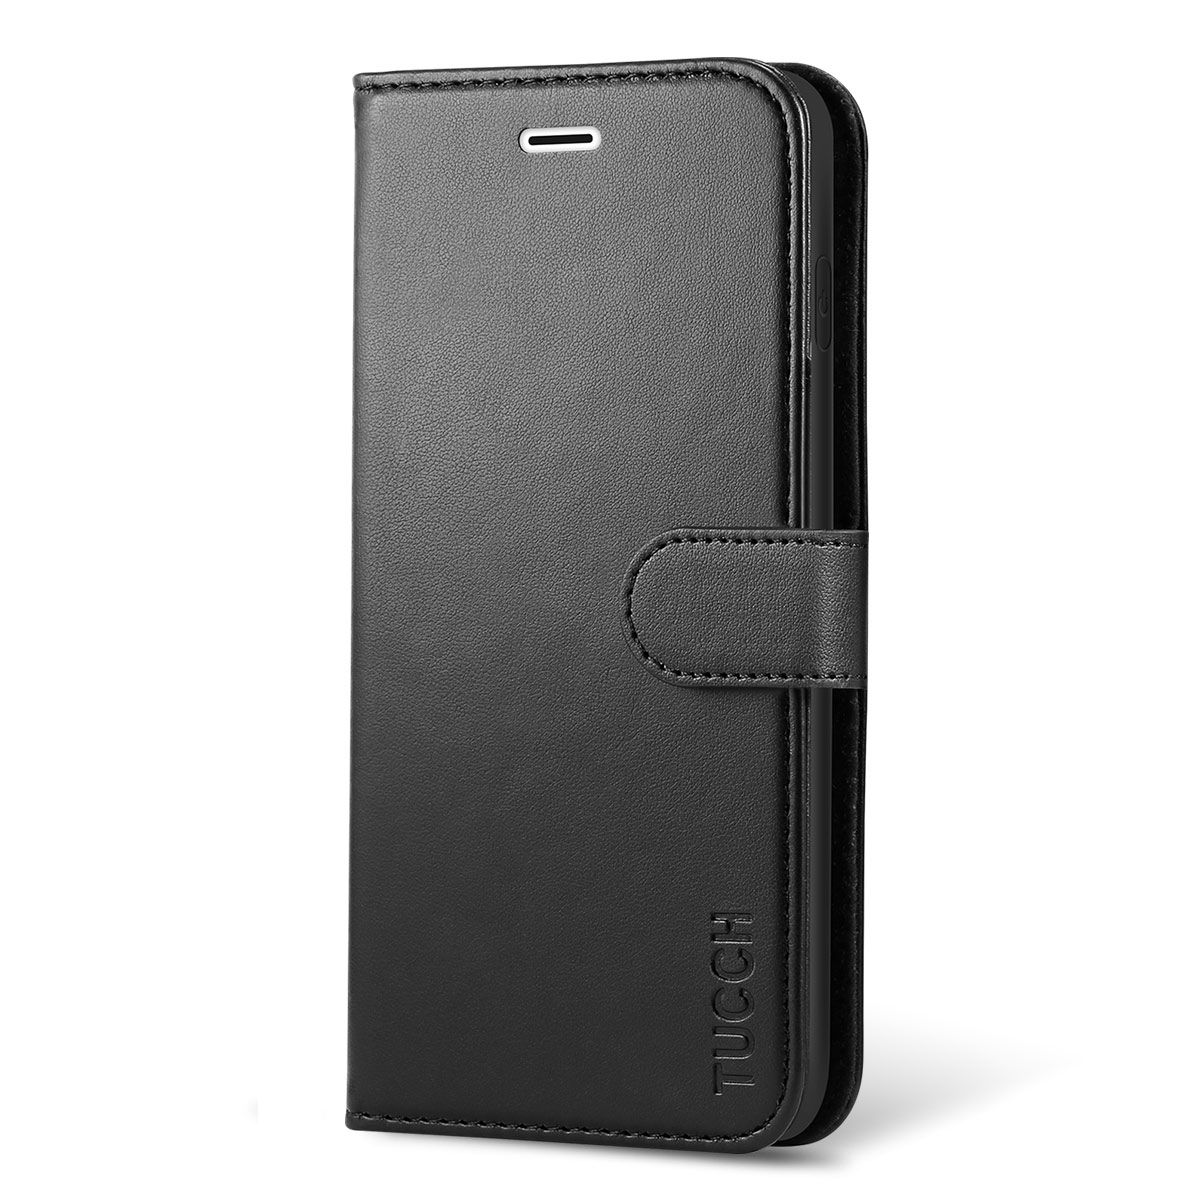 kaos Bøje bid TUCCH iPhone 8 Plus Wallet Case, iPhone 7 Plus Case, Premium PU Leather Flip  Folio Case